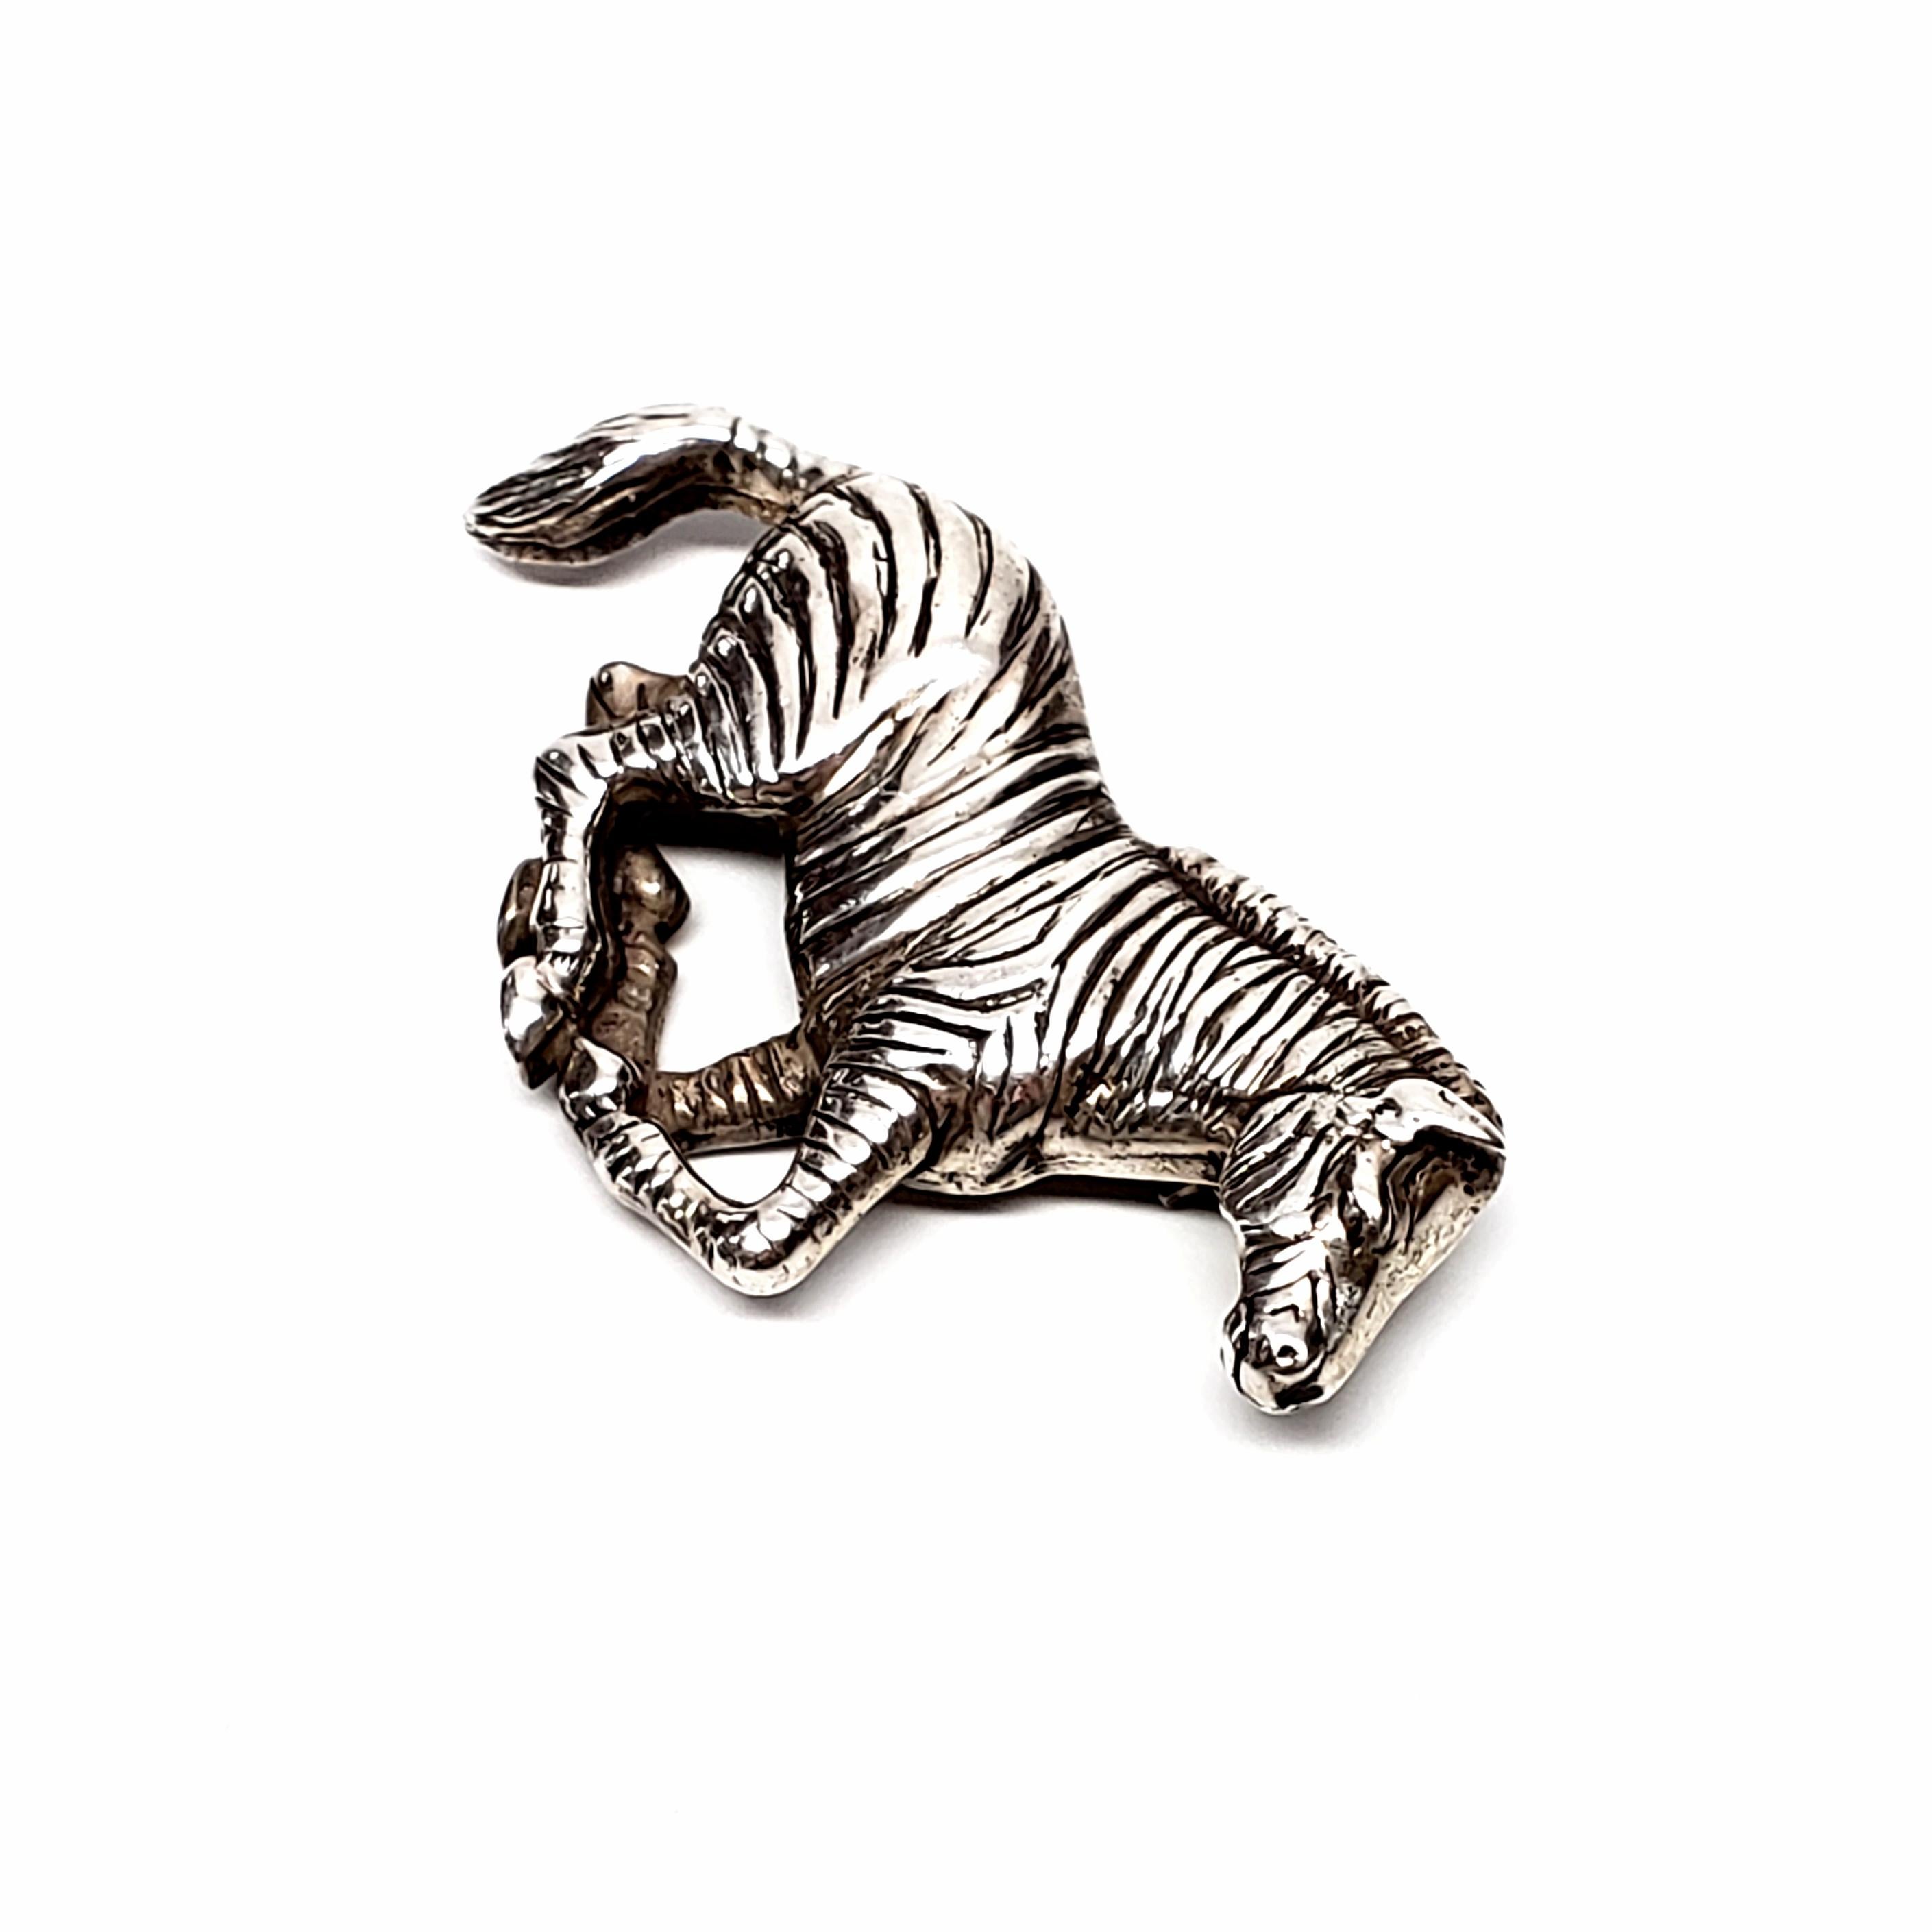 Vintage Carol Felley '91 sterling silver running zebra pin.

Southwestern designer Carol Felley, beautifully detailed zebra pin.

Measures approx 1